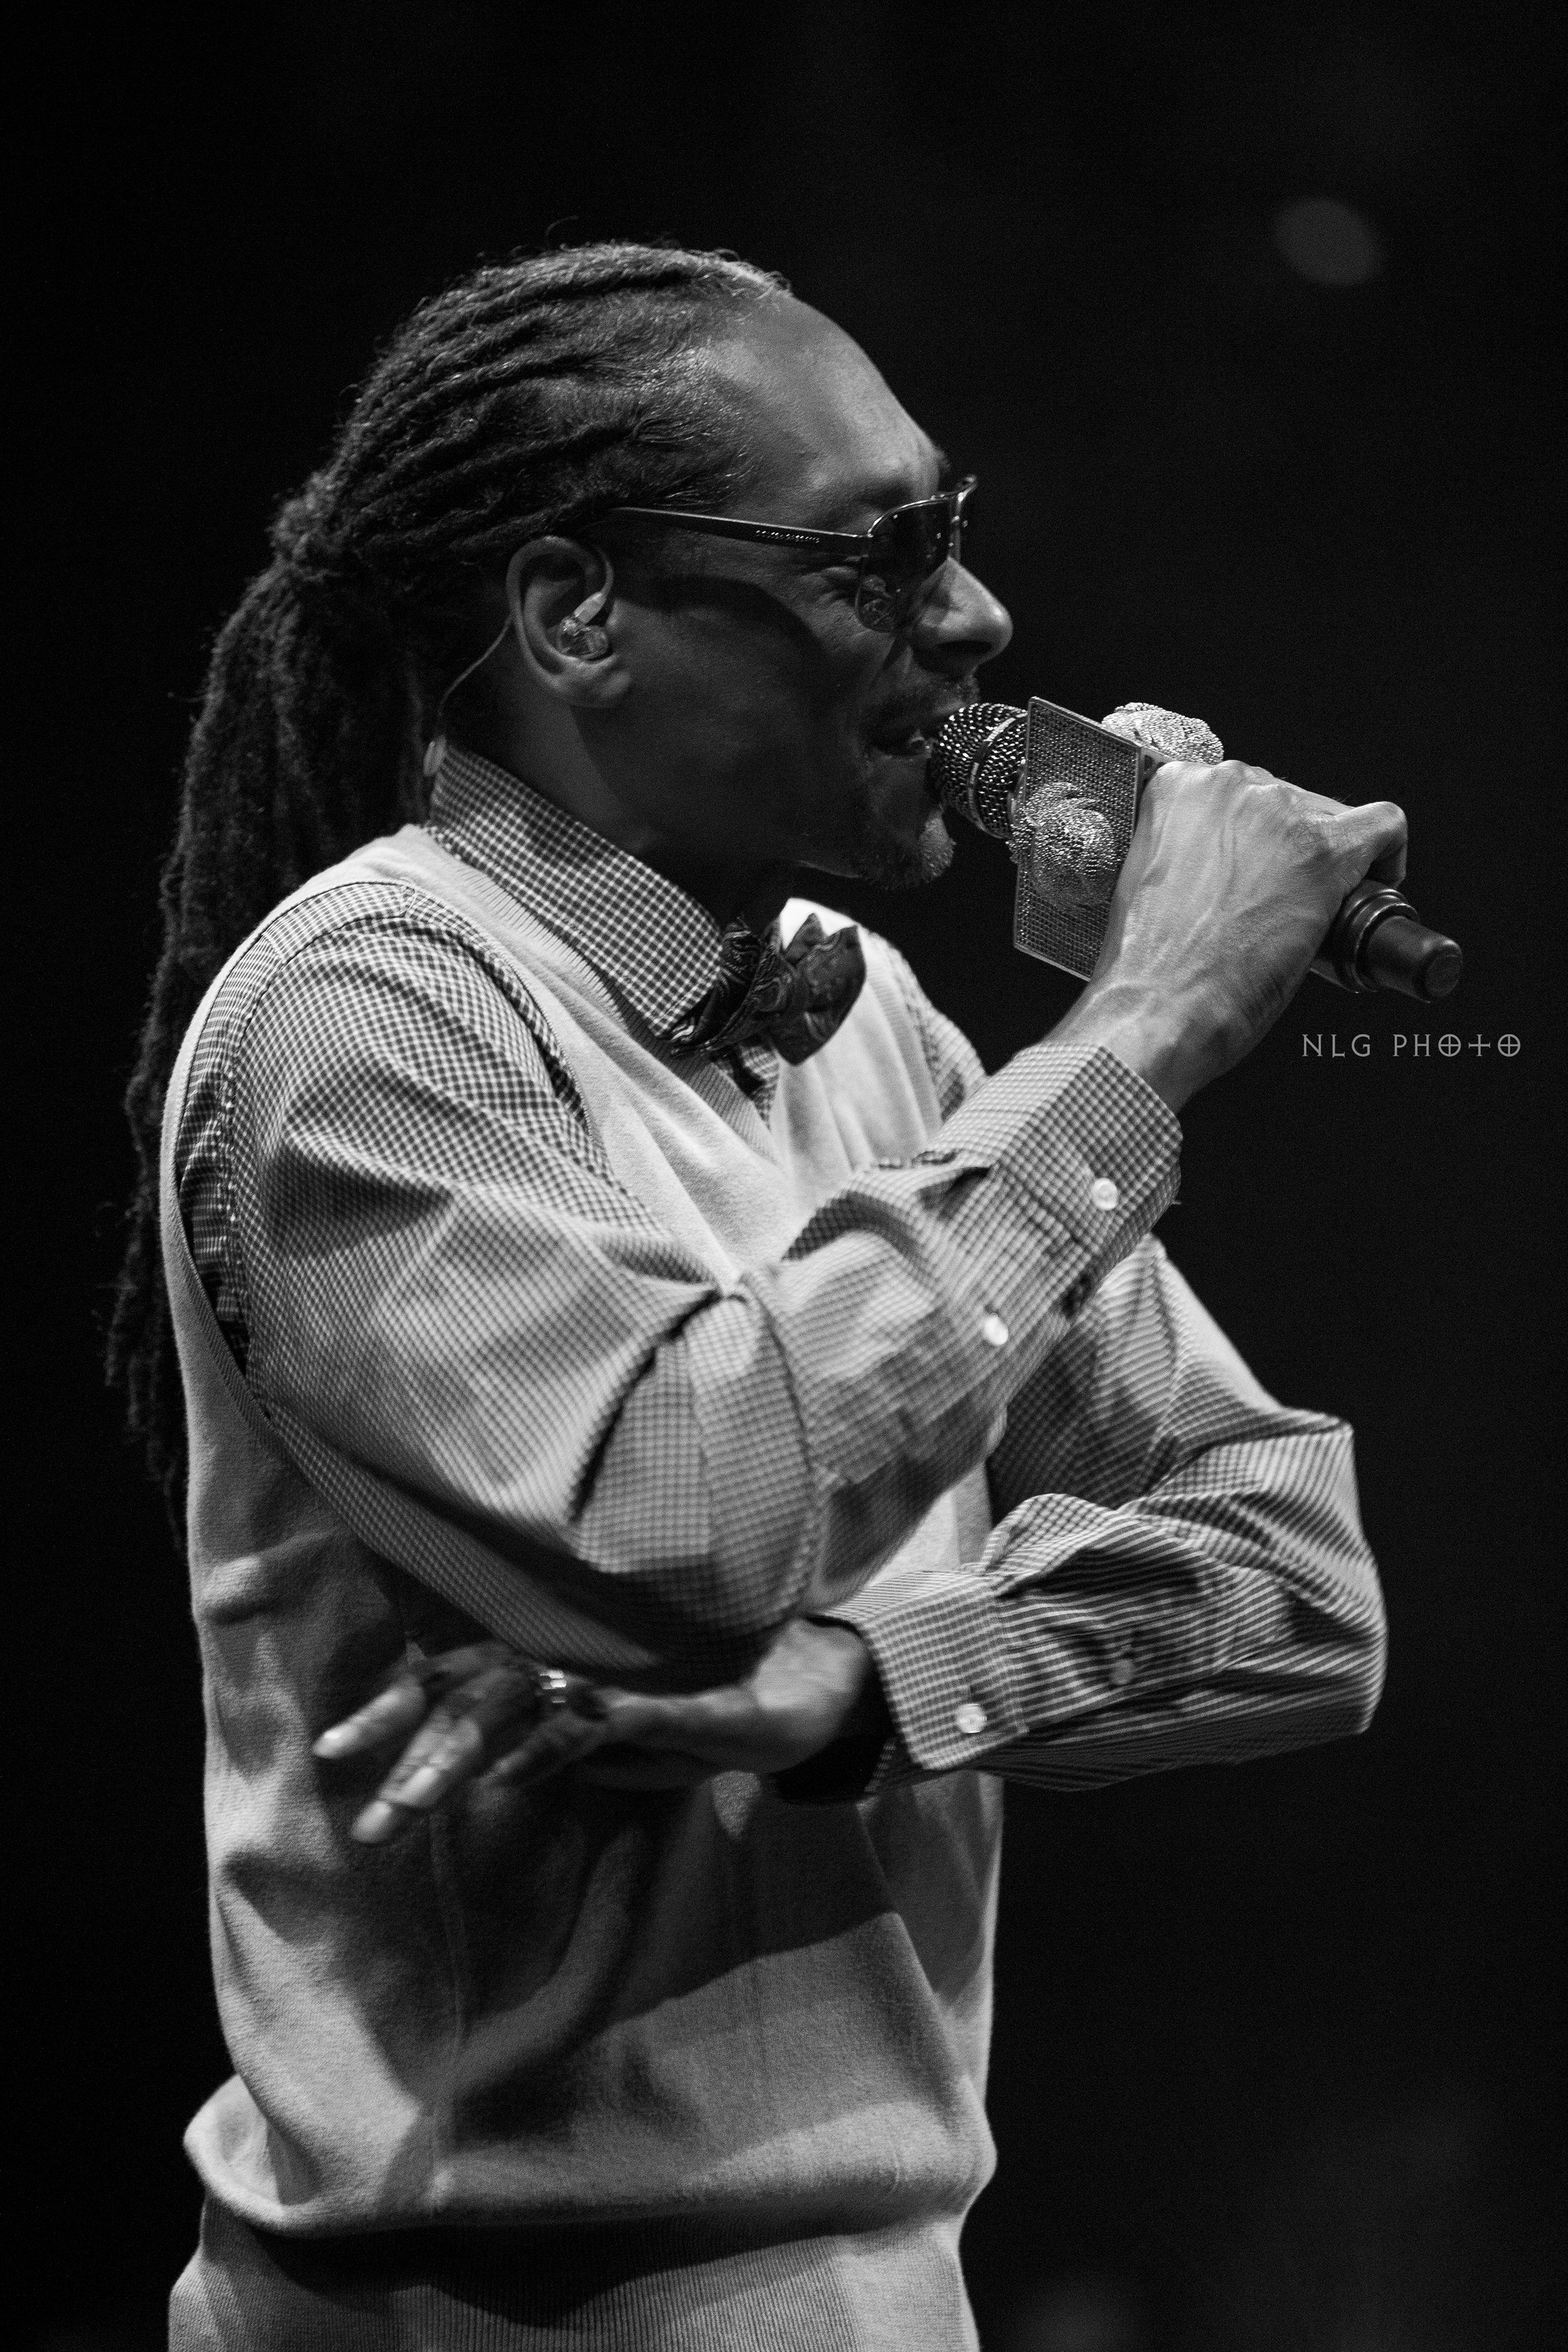 Snoop-Dog_T-Boz-Unplugged_Live_0112-FINAL-Edited-JPG.JPG